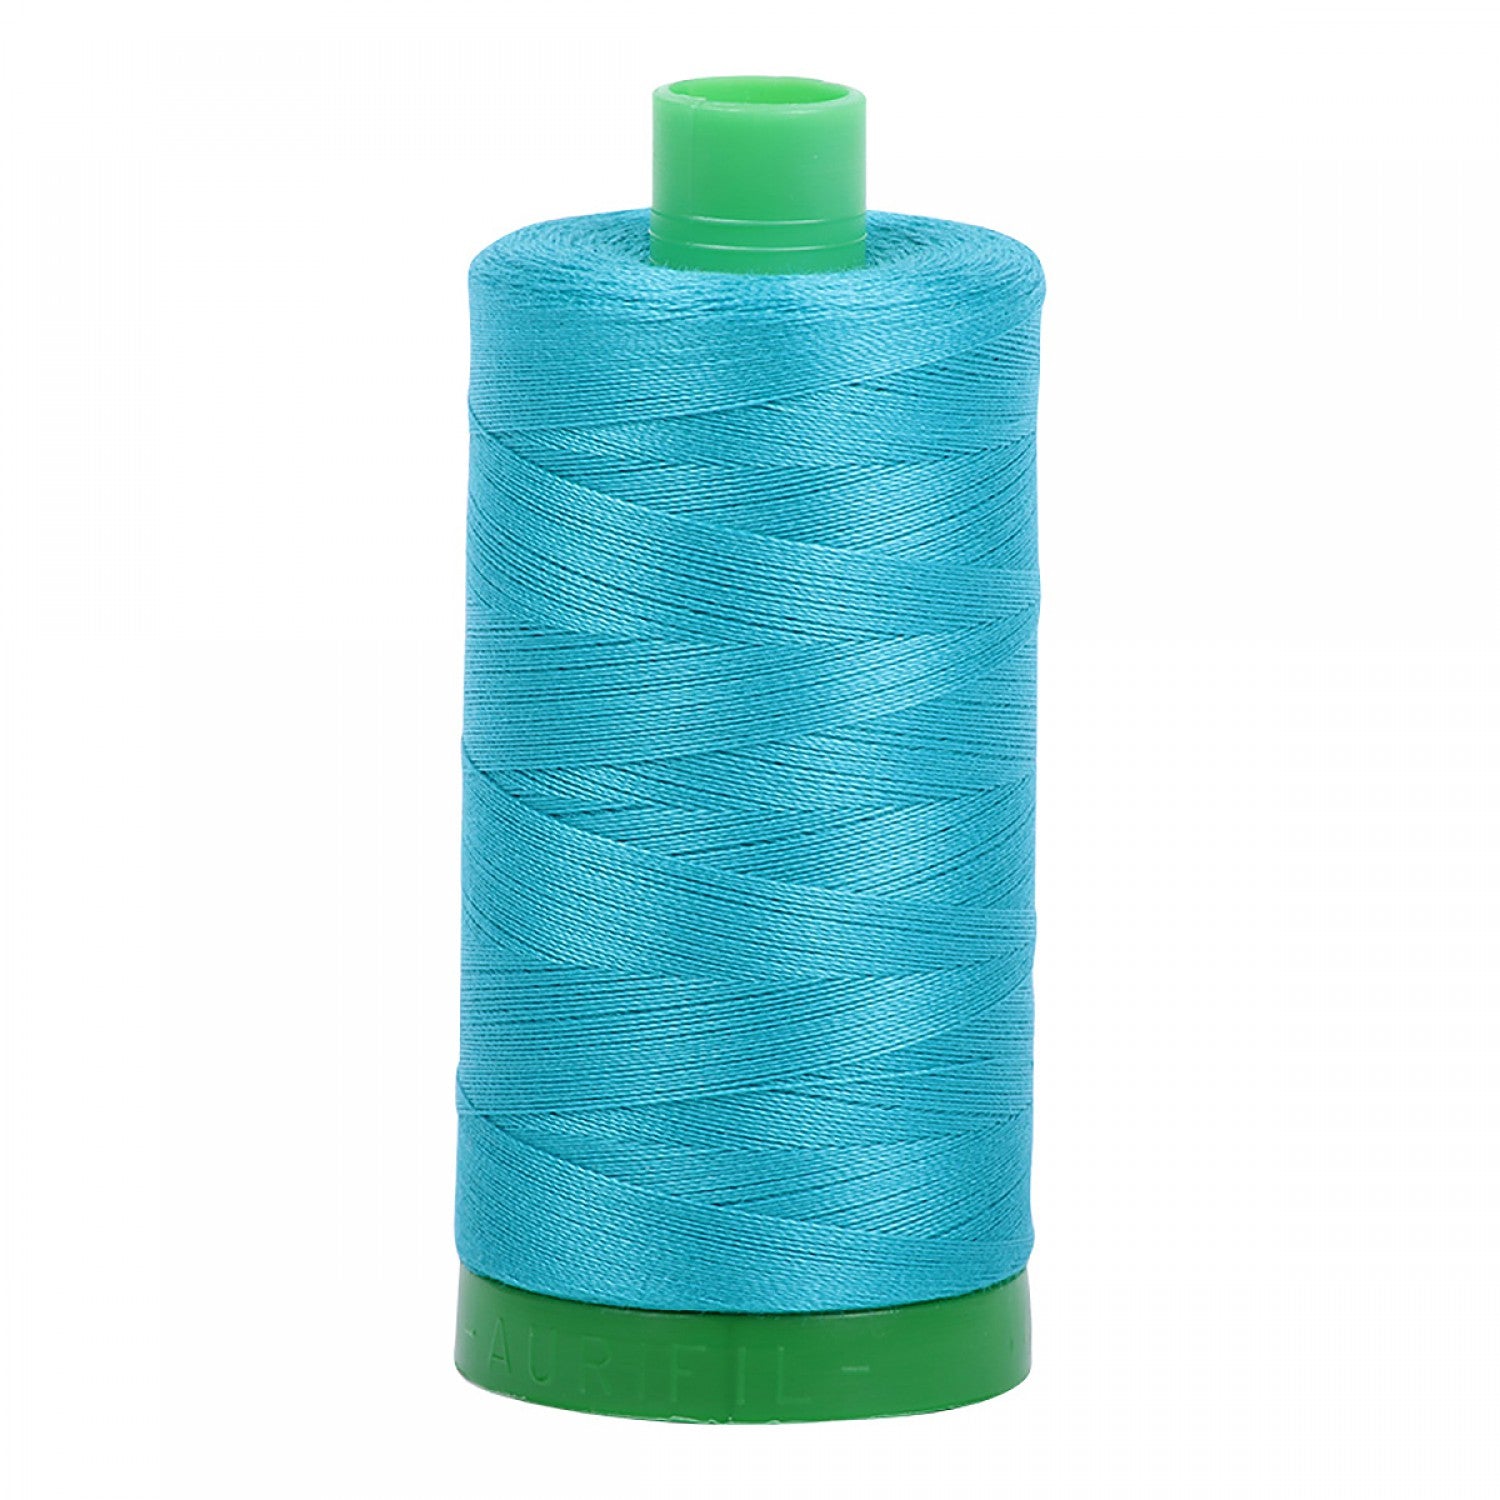 Aurifil Mako 40 wt Cotton Thread - 1094 yds - Turquoise (#2810)